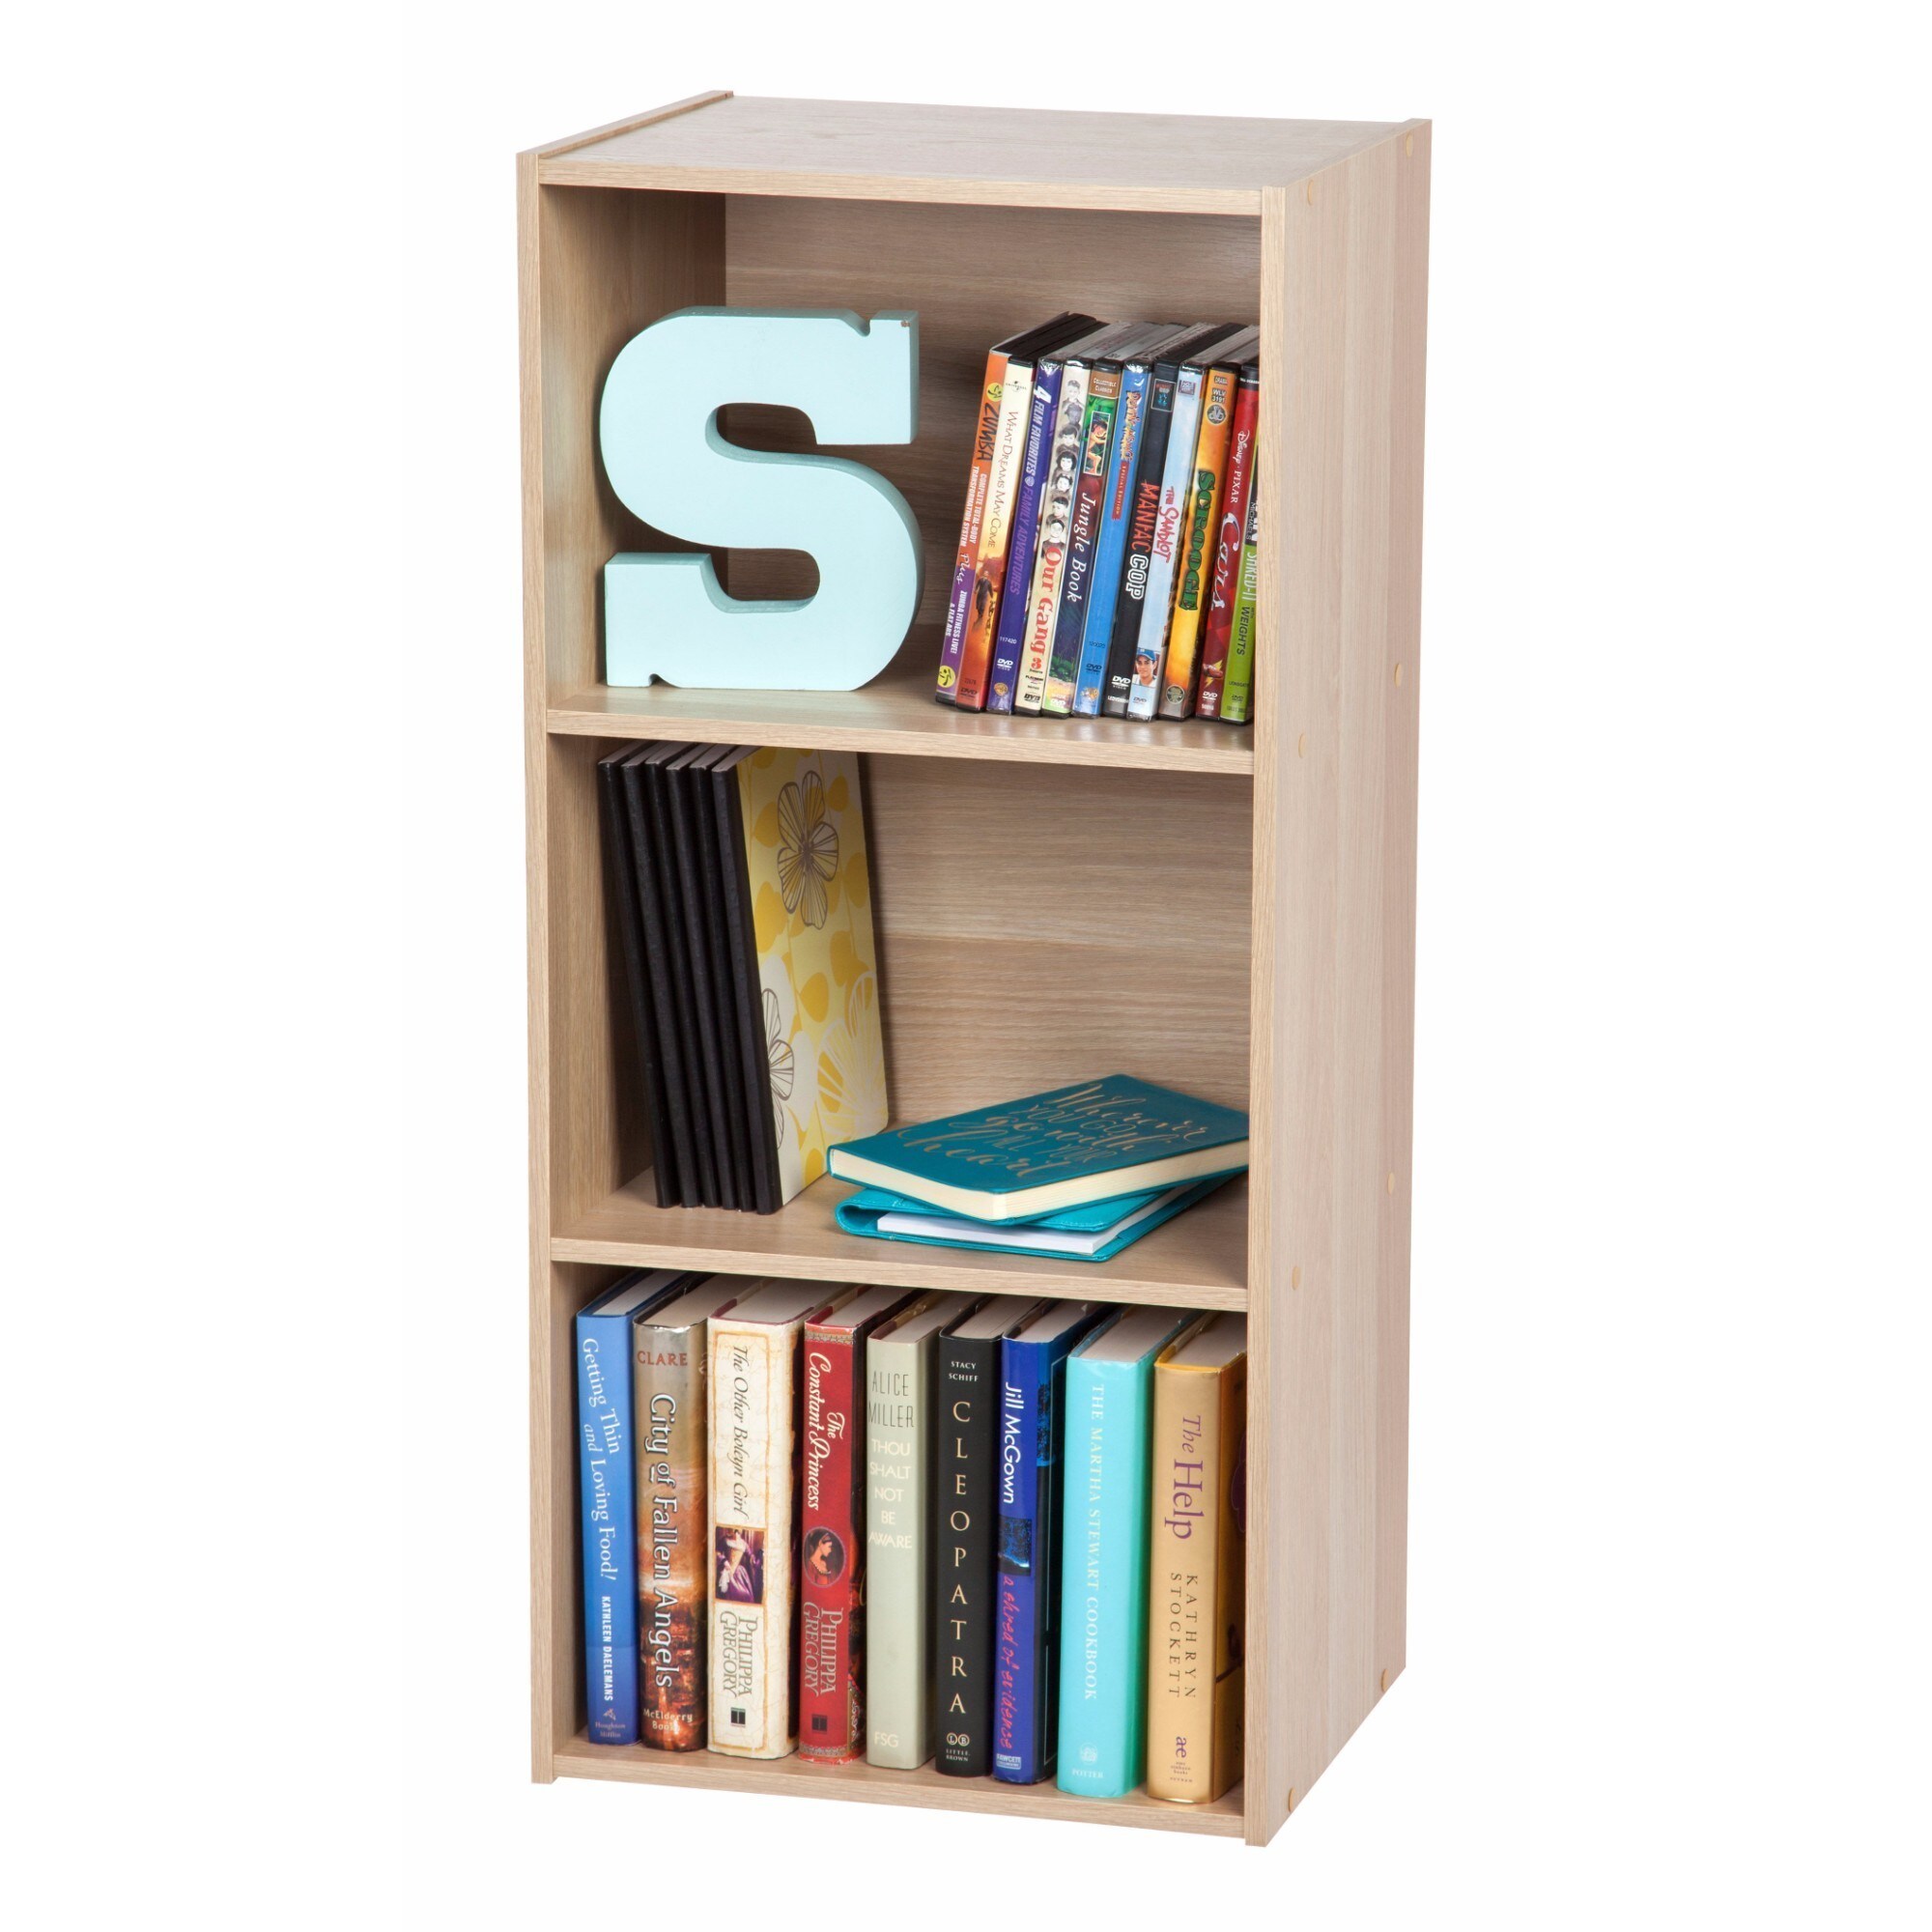 https://ak1.ostkcdn.com/images/products/17158984/Iris-3-tier-Basic-Light-Brown-Wood-Bookcase-Storage-Shelf-aca342fc-5144-4577-8020-58befcecca67.jpg